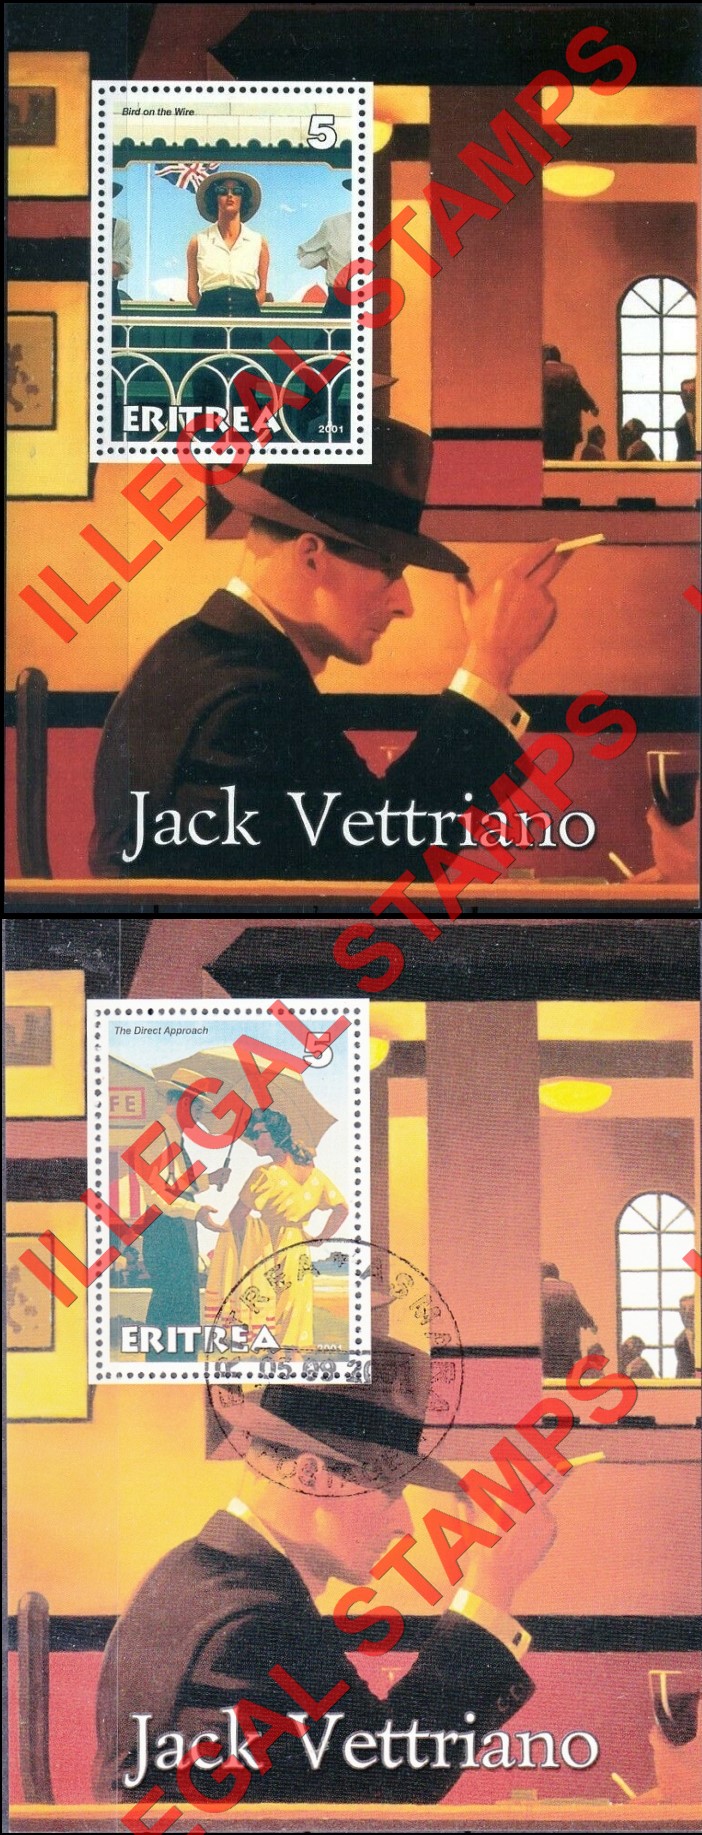 Eritrea 2001 Jack Vettriano Counterfeit Illegal Stamp Souvenir Sheets of 1